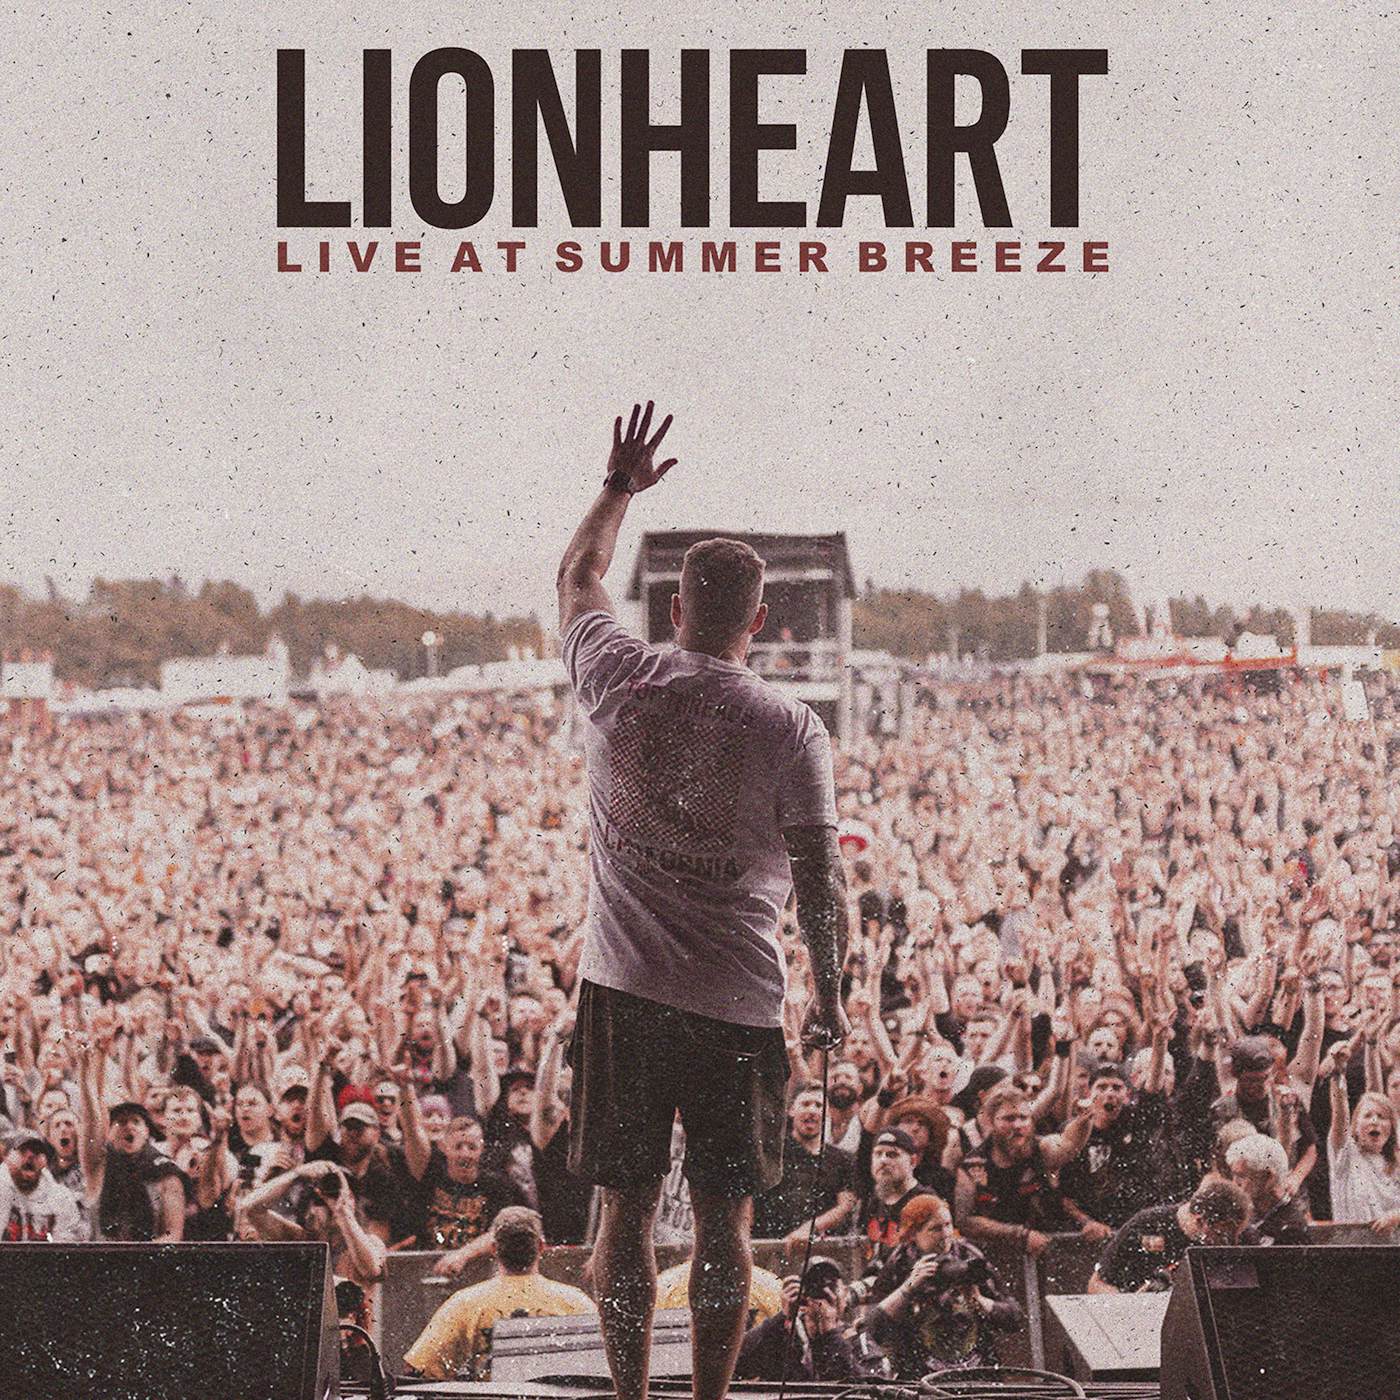 Lionheart LIVE AT SUMMER BREEZE CD